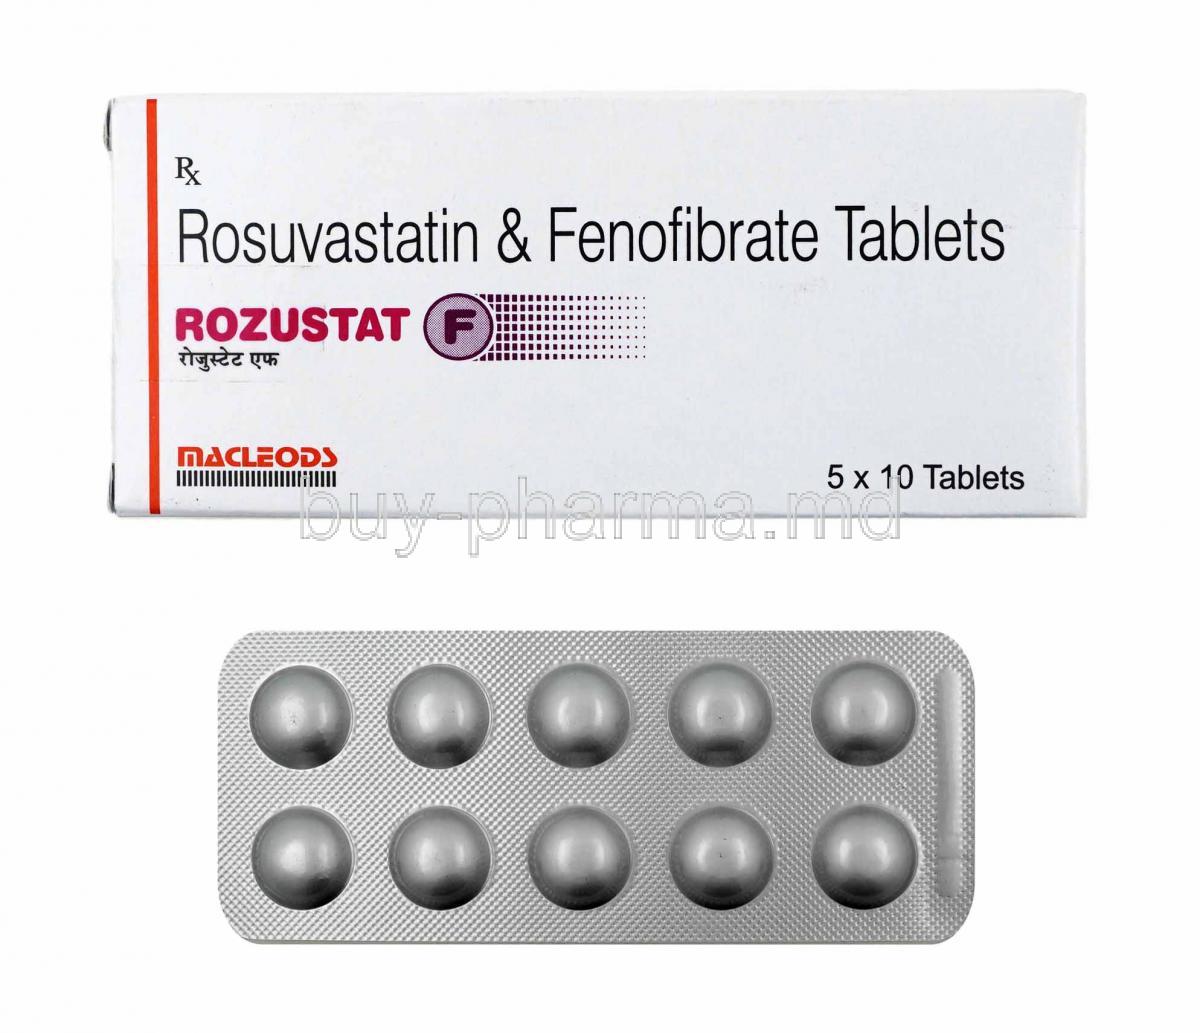 Rozustat F, Fenofibrate and Rosuvastatin10mg box and tablets